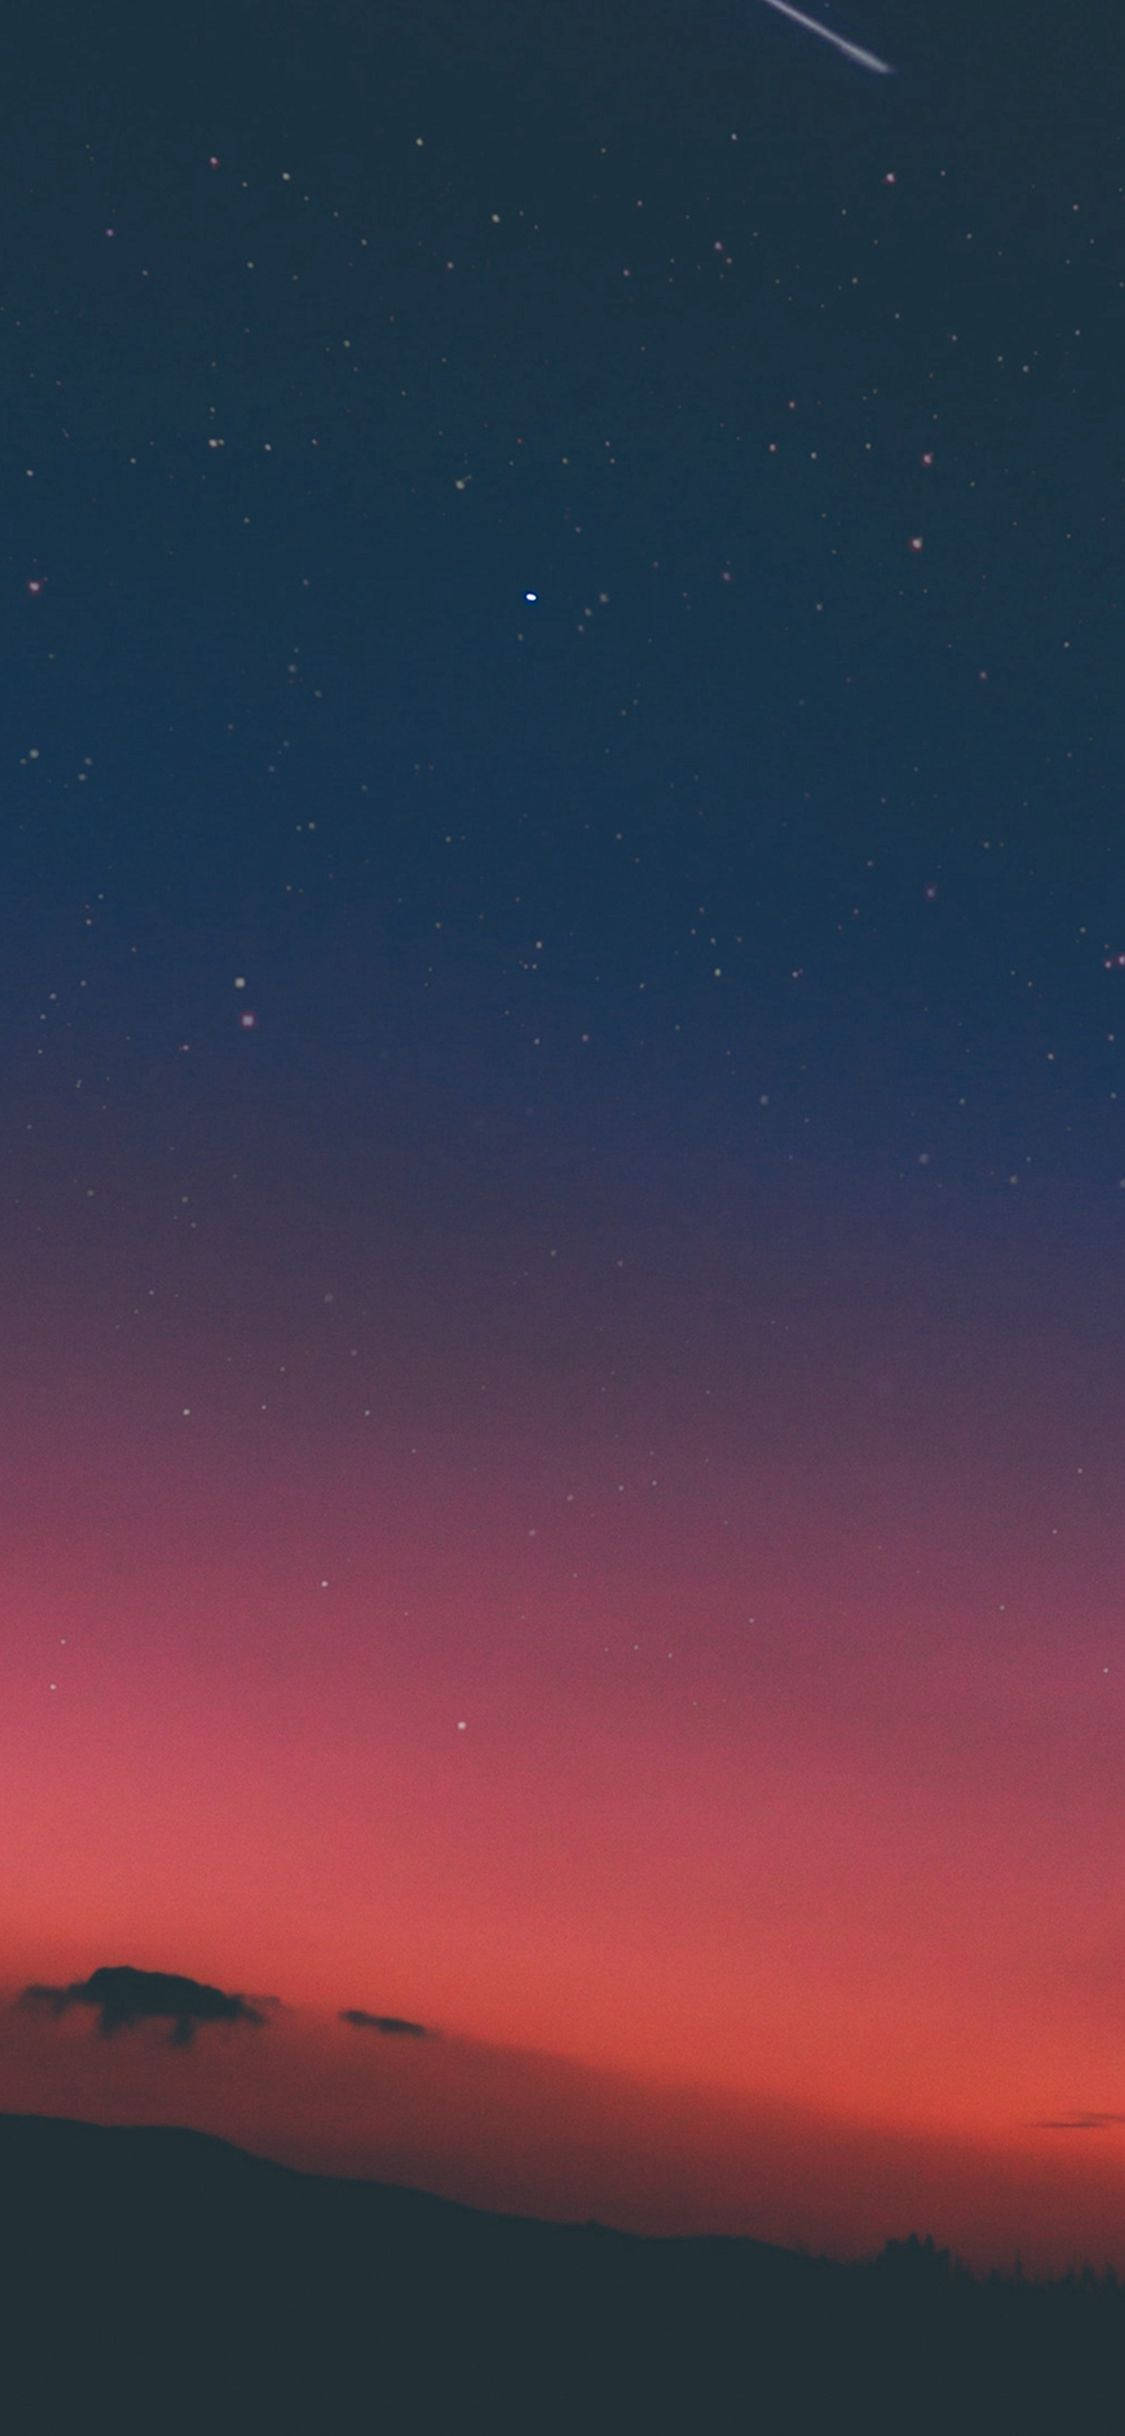 Aesthetic iPhone X Night Sky Sunset Wallpaper